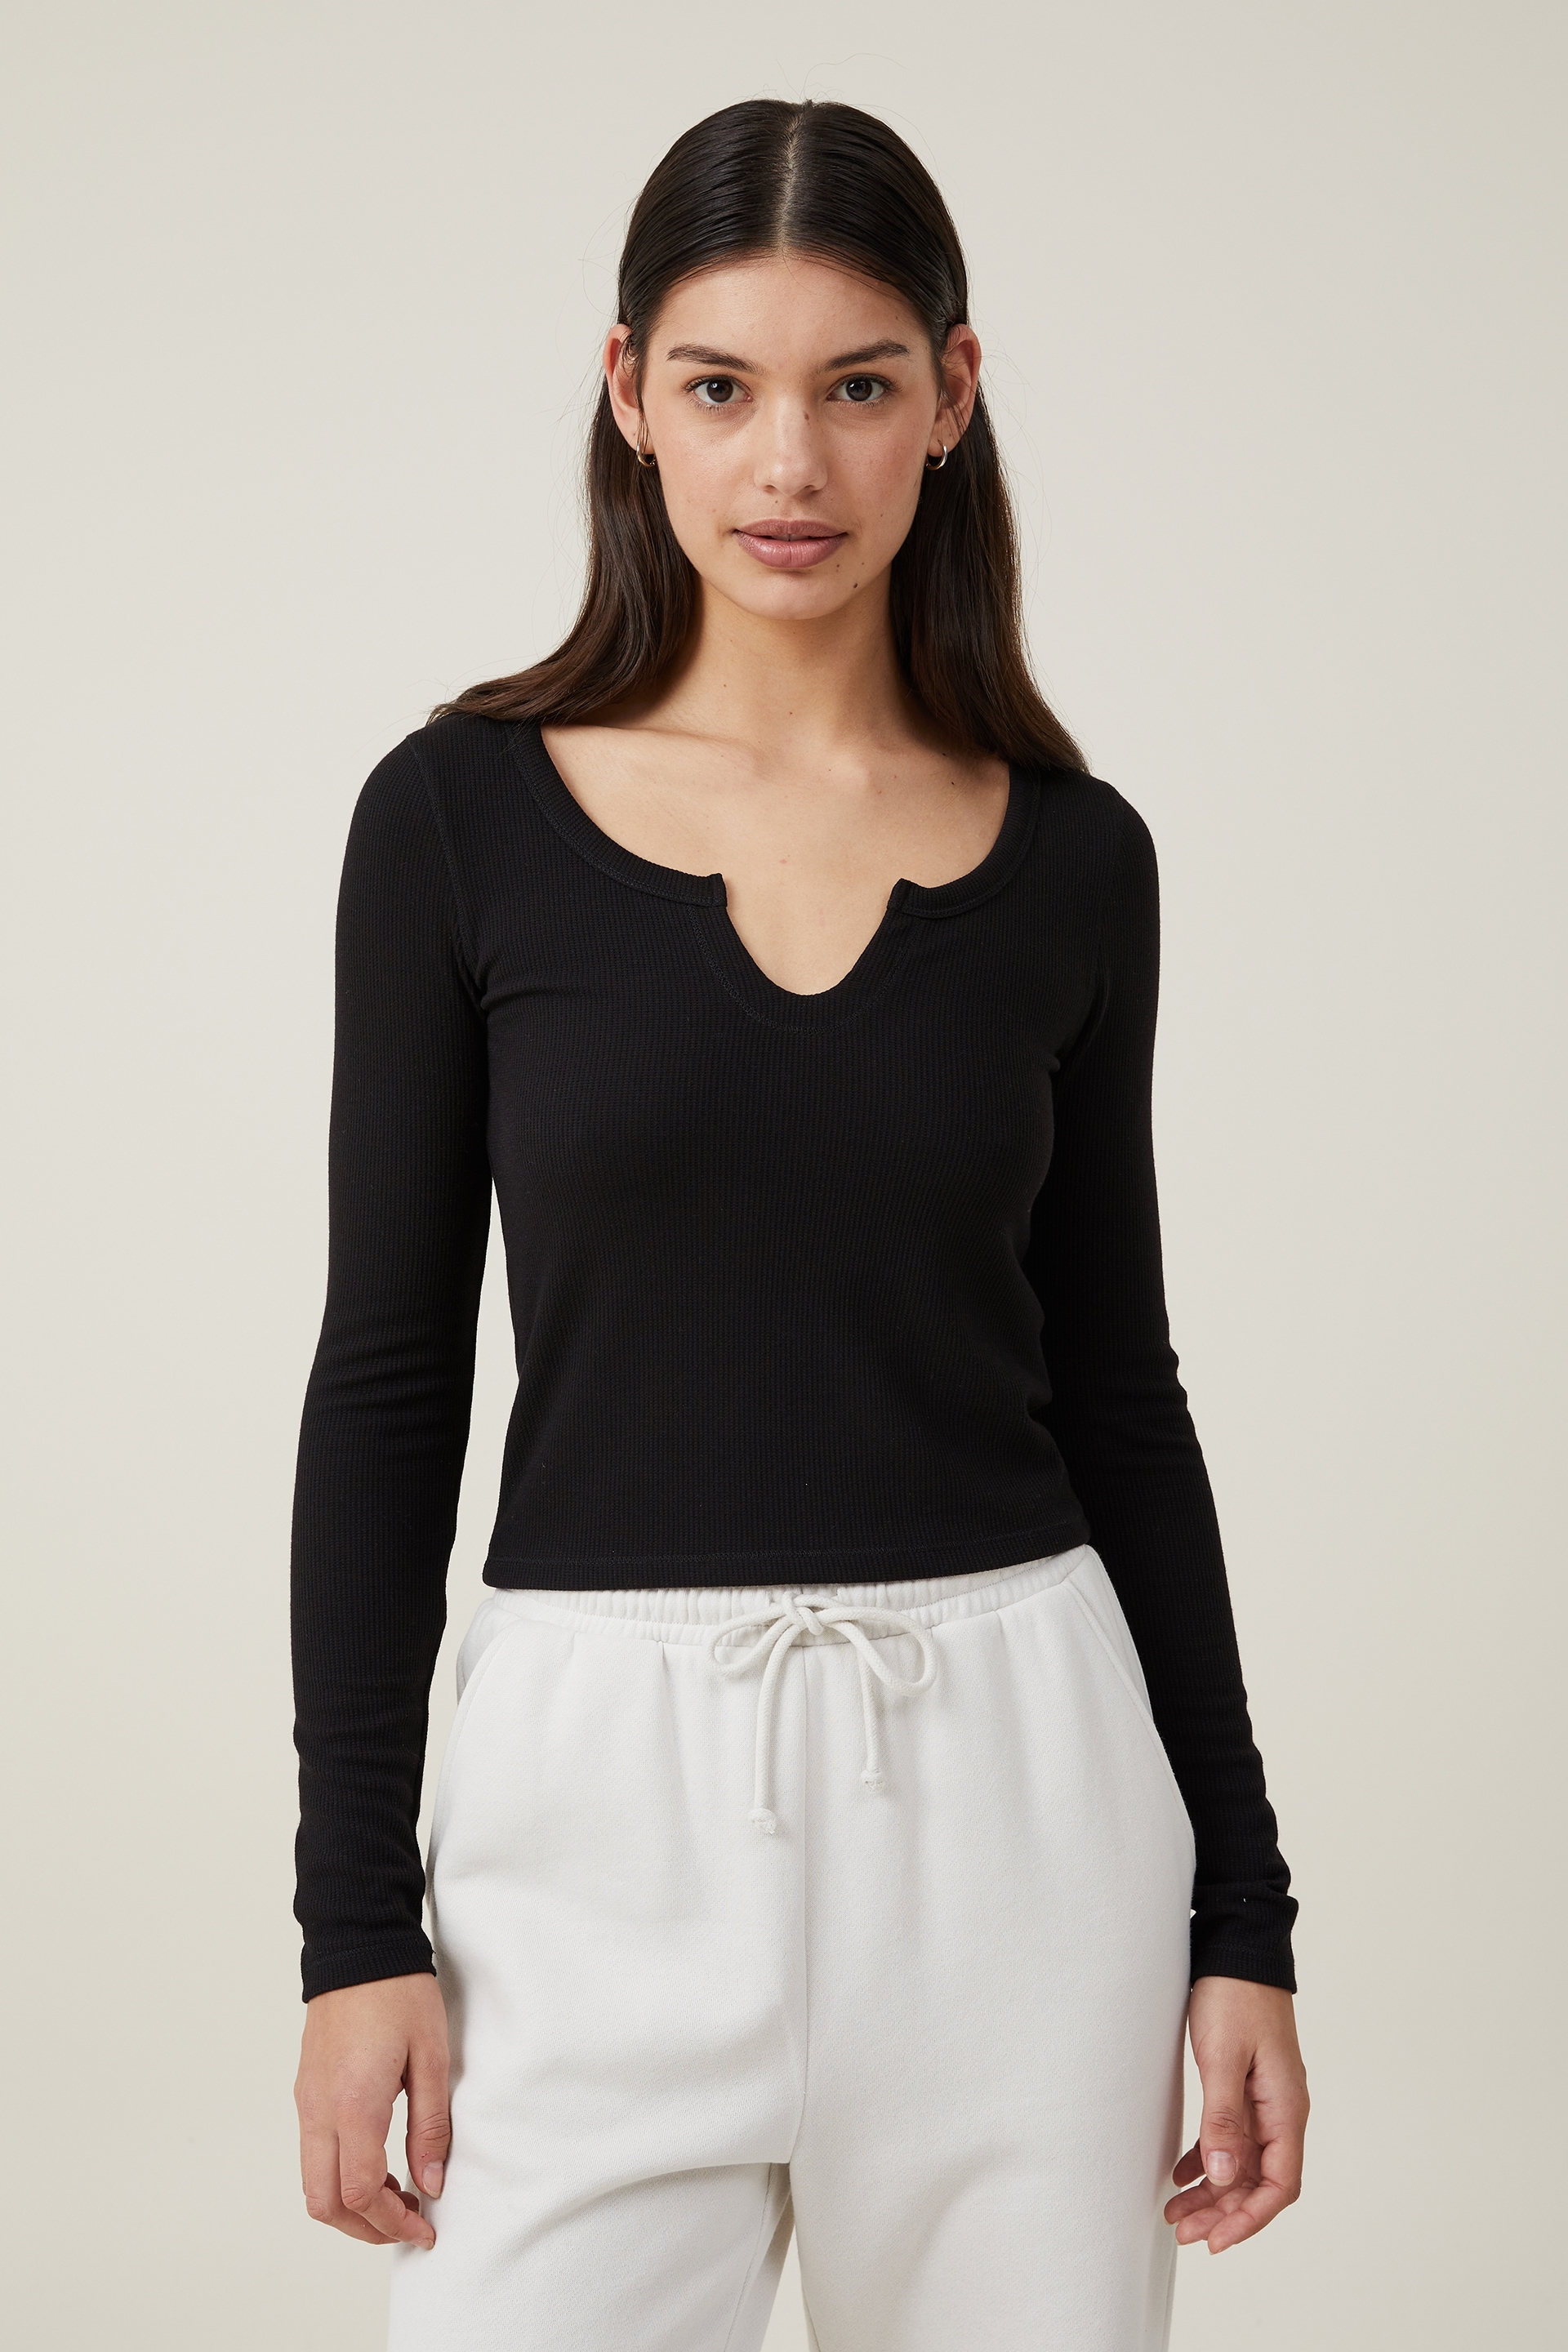 Cotton On Women - Willa Waffle Long Sleeve Top - Black